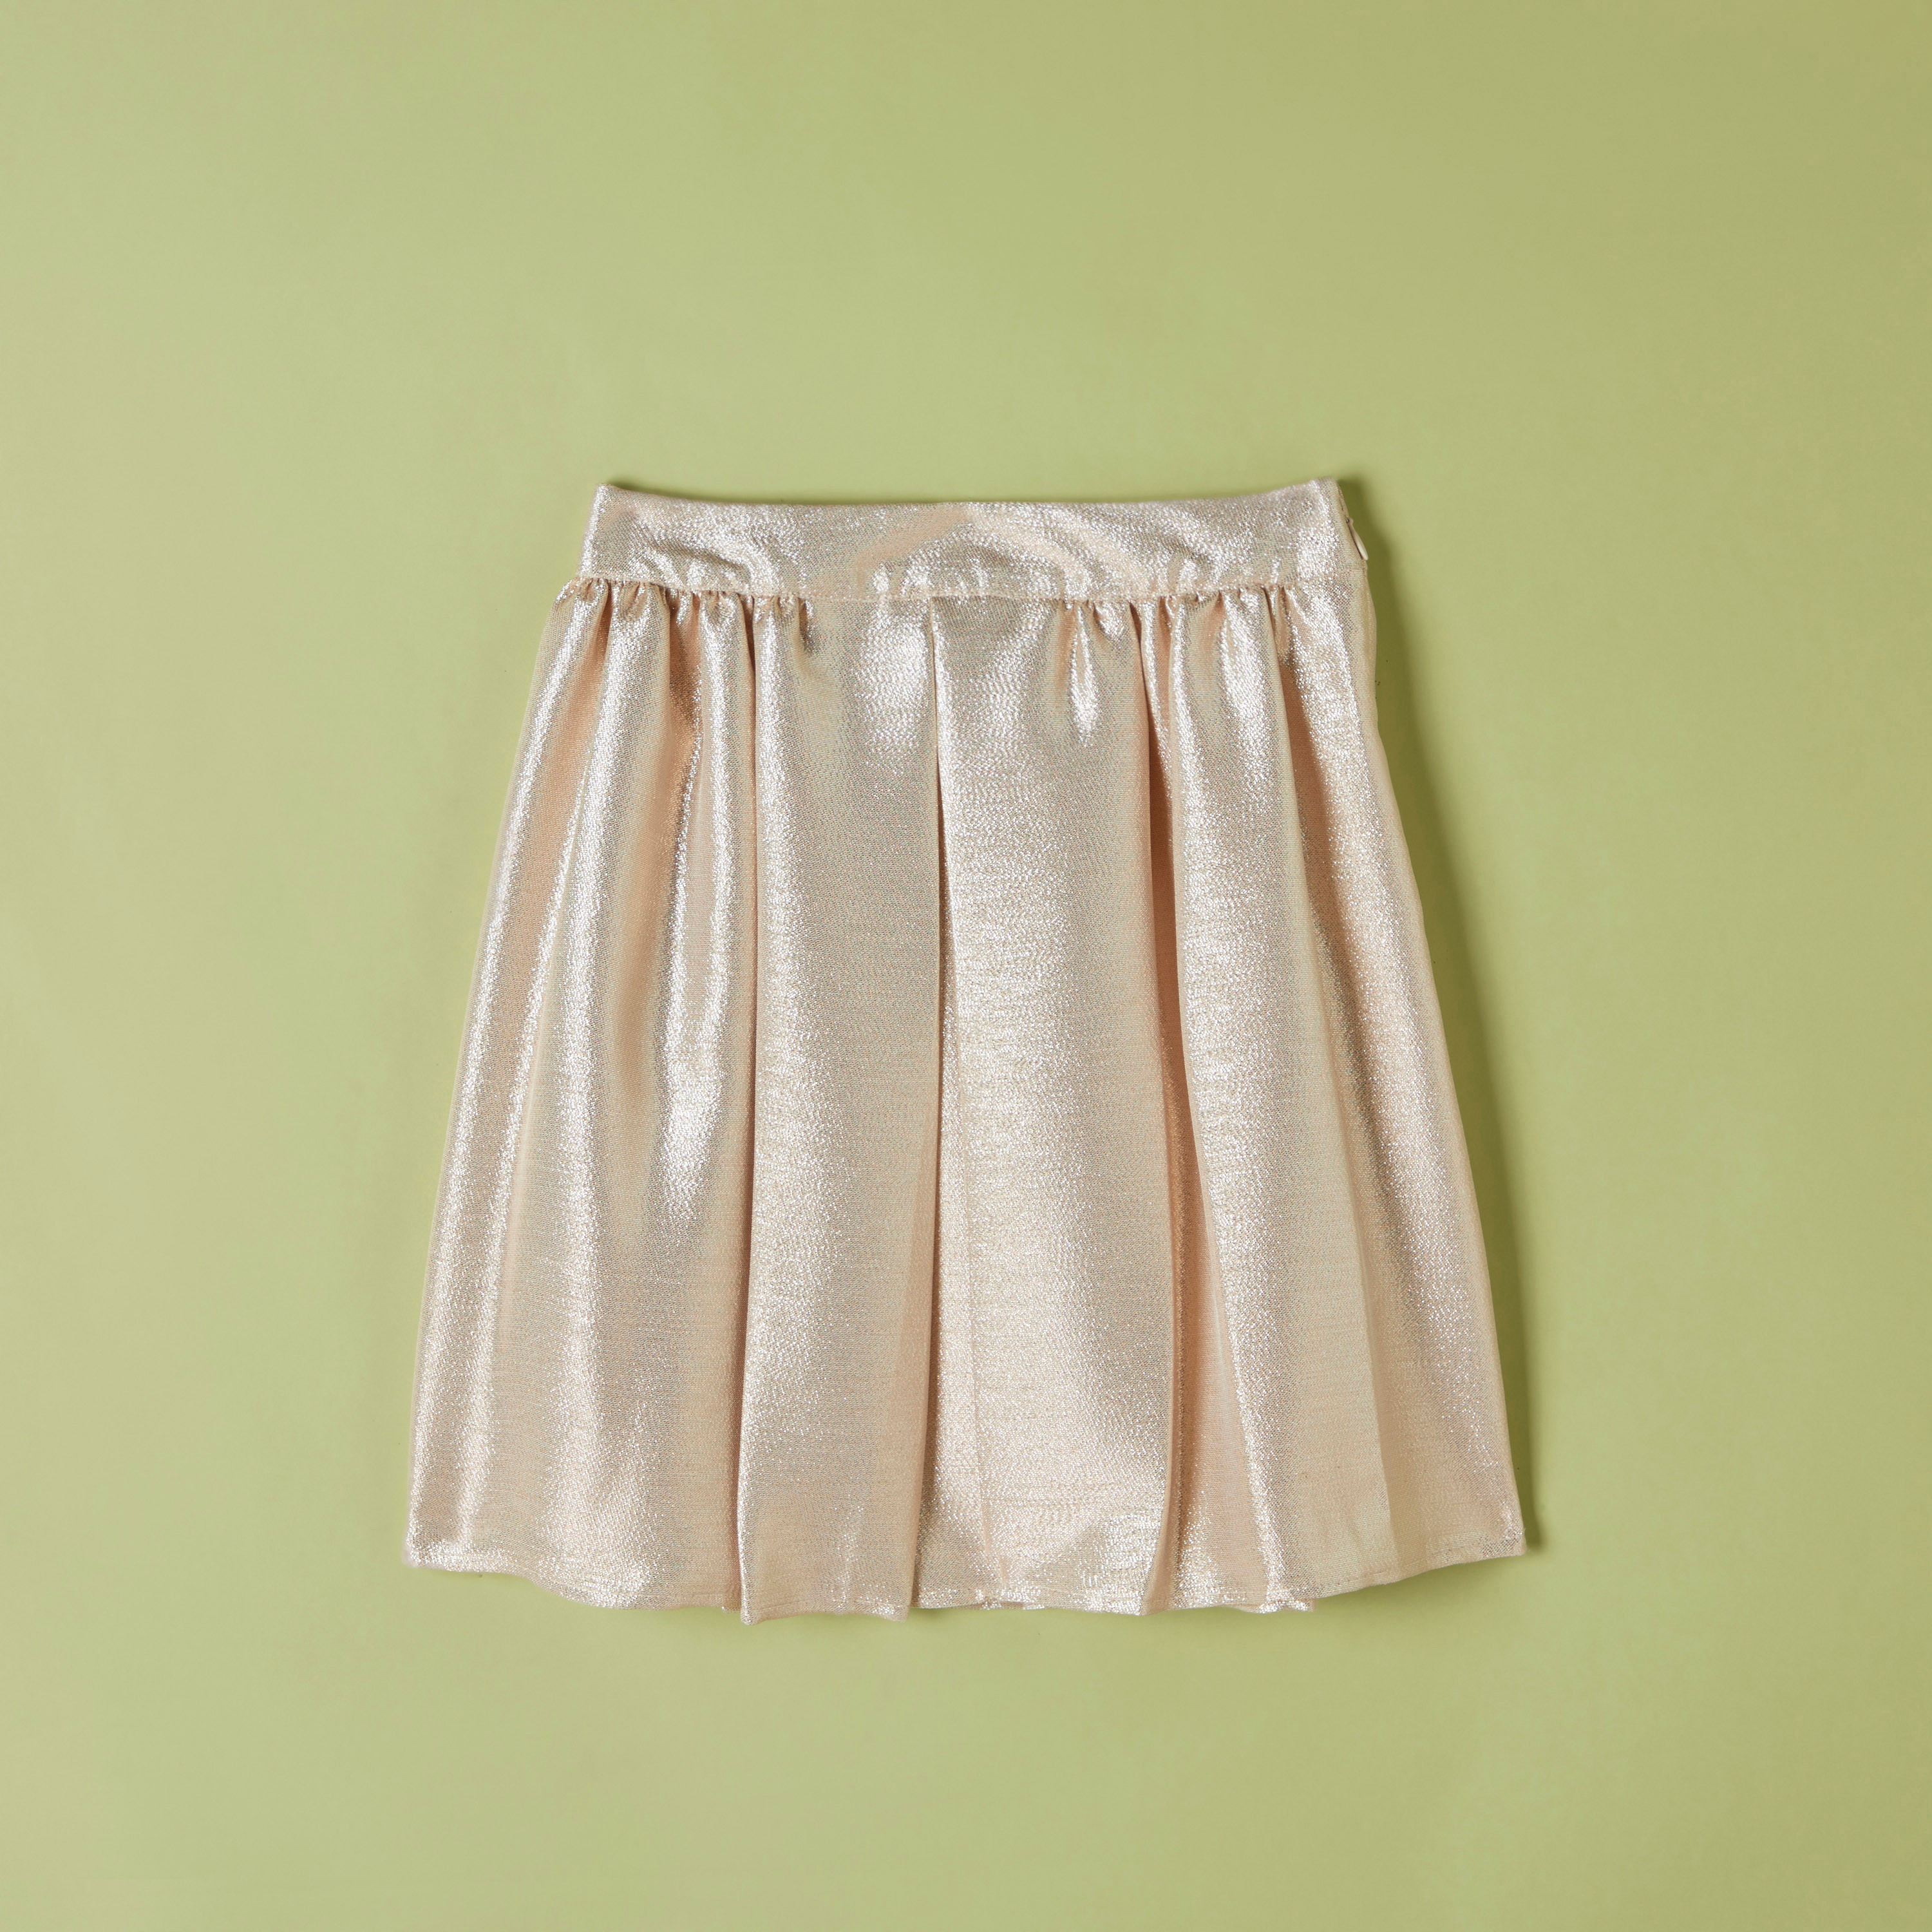 Discover 133+ girls knee length skirts